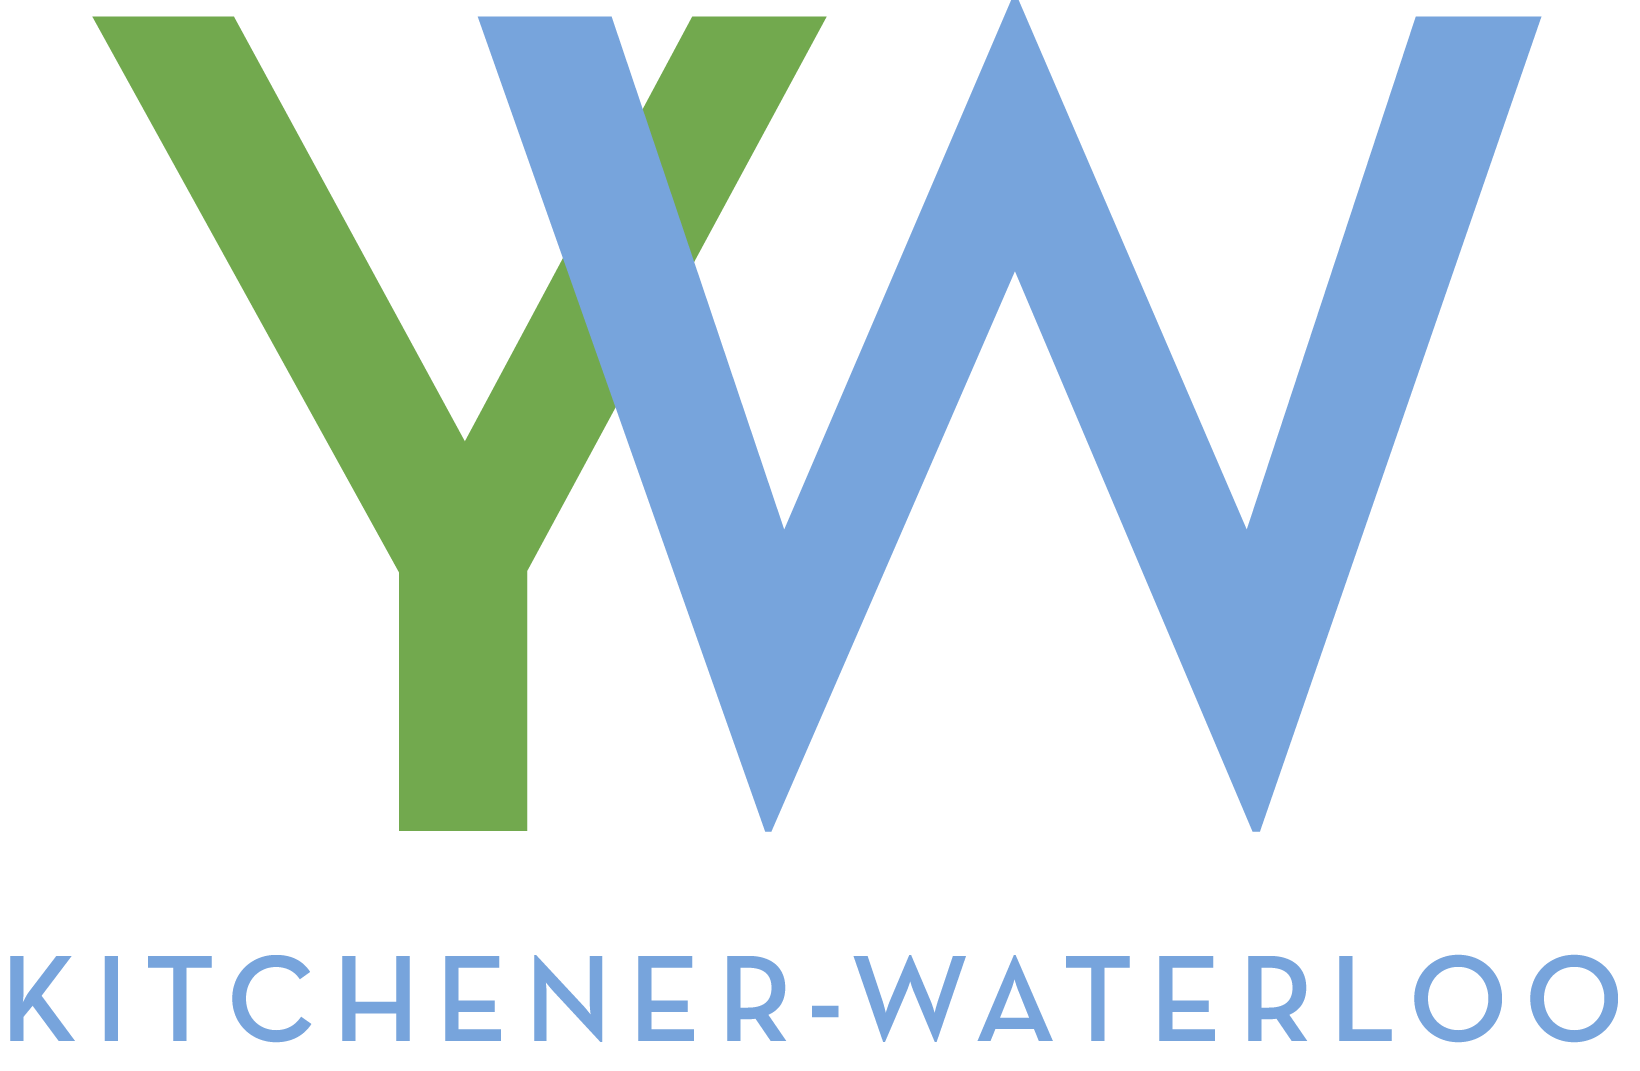 YWCA Kitchener-Waterloo